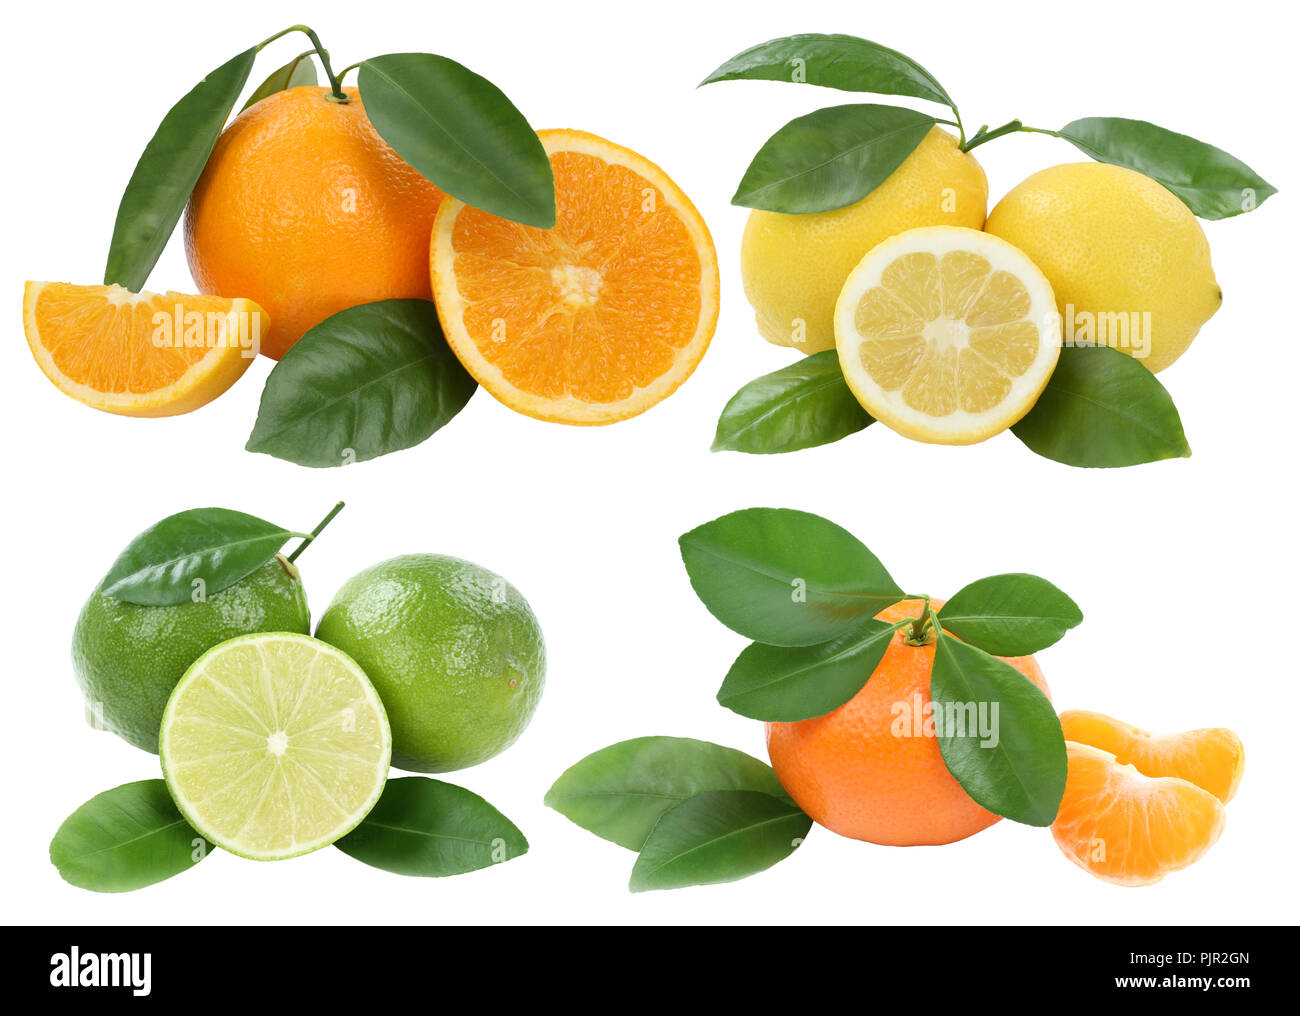 Collection of oranges mandarin lemon fruits isolated on a white background Stock Photo